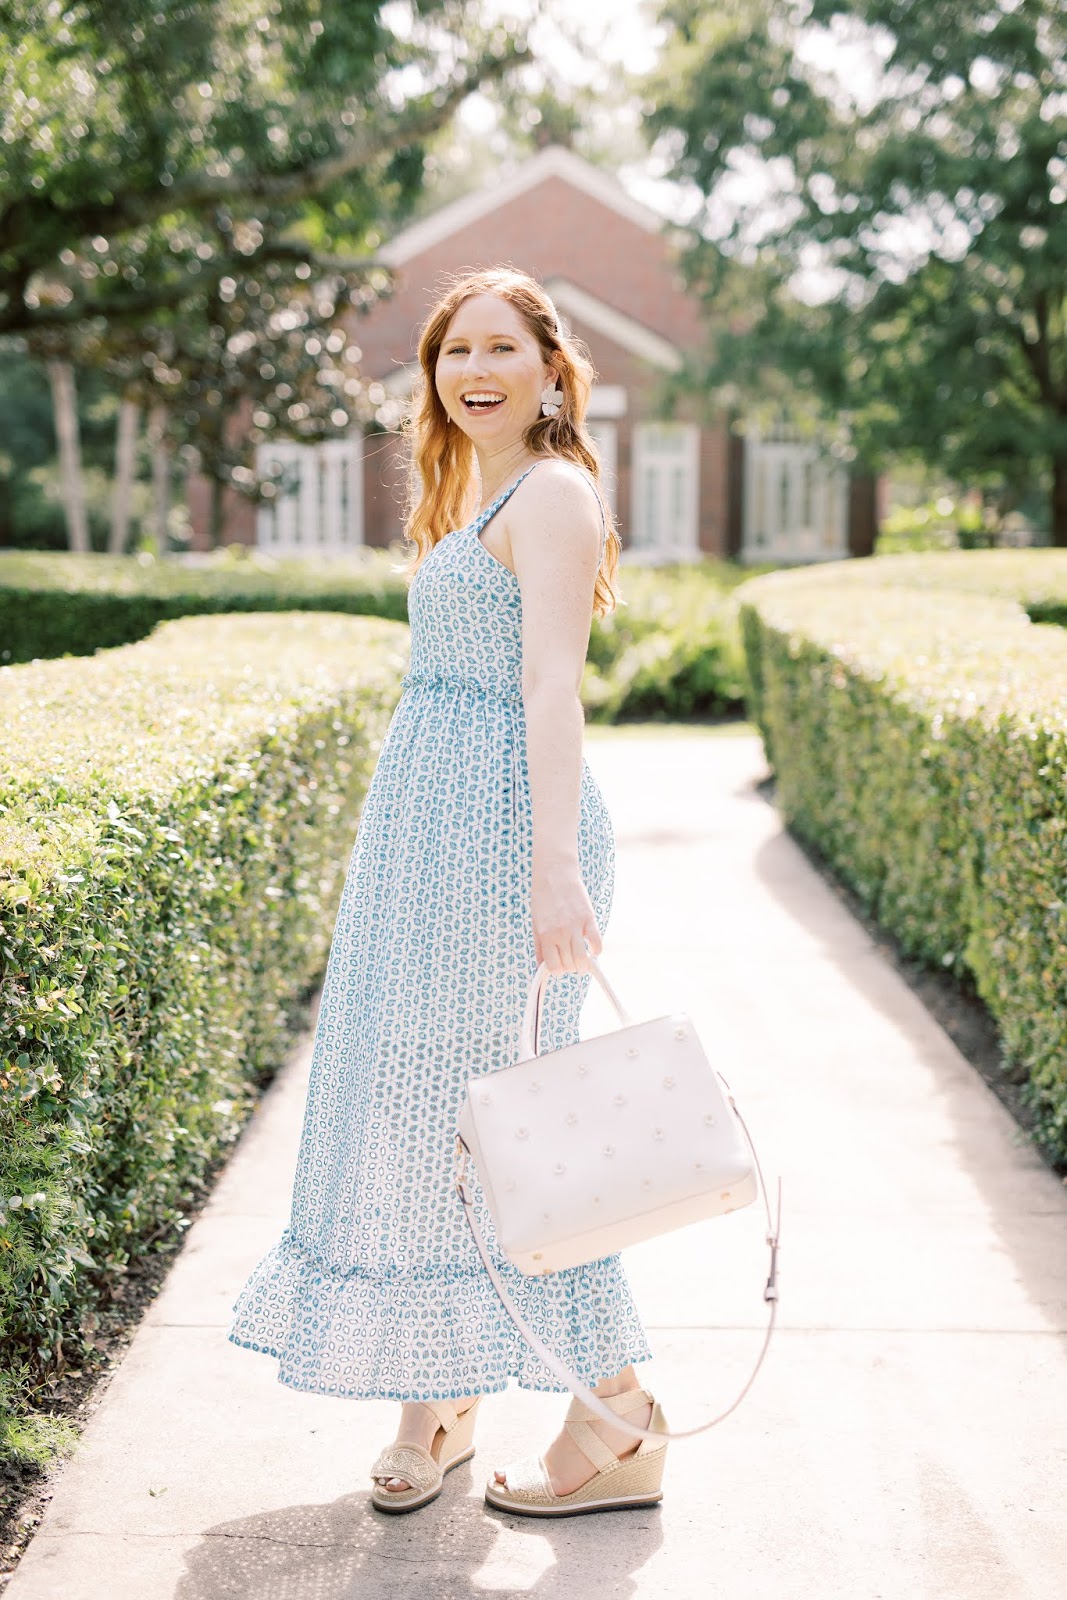 Tampa Blogger Amanda Burrows | Affordable by Amanda | Summer Eyelet Embroidery Dresses Under $50 | Darla Eyelet Dress Francesca's Semi-Annual Sale